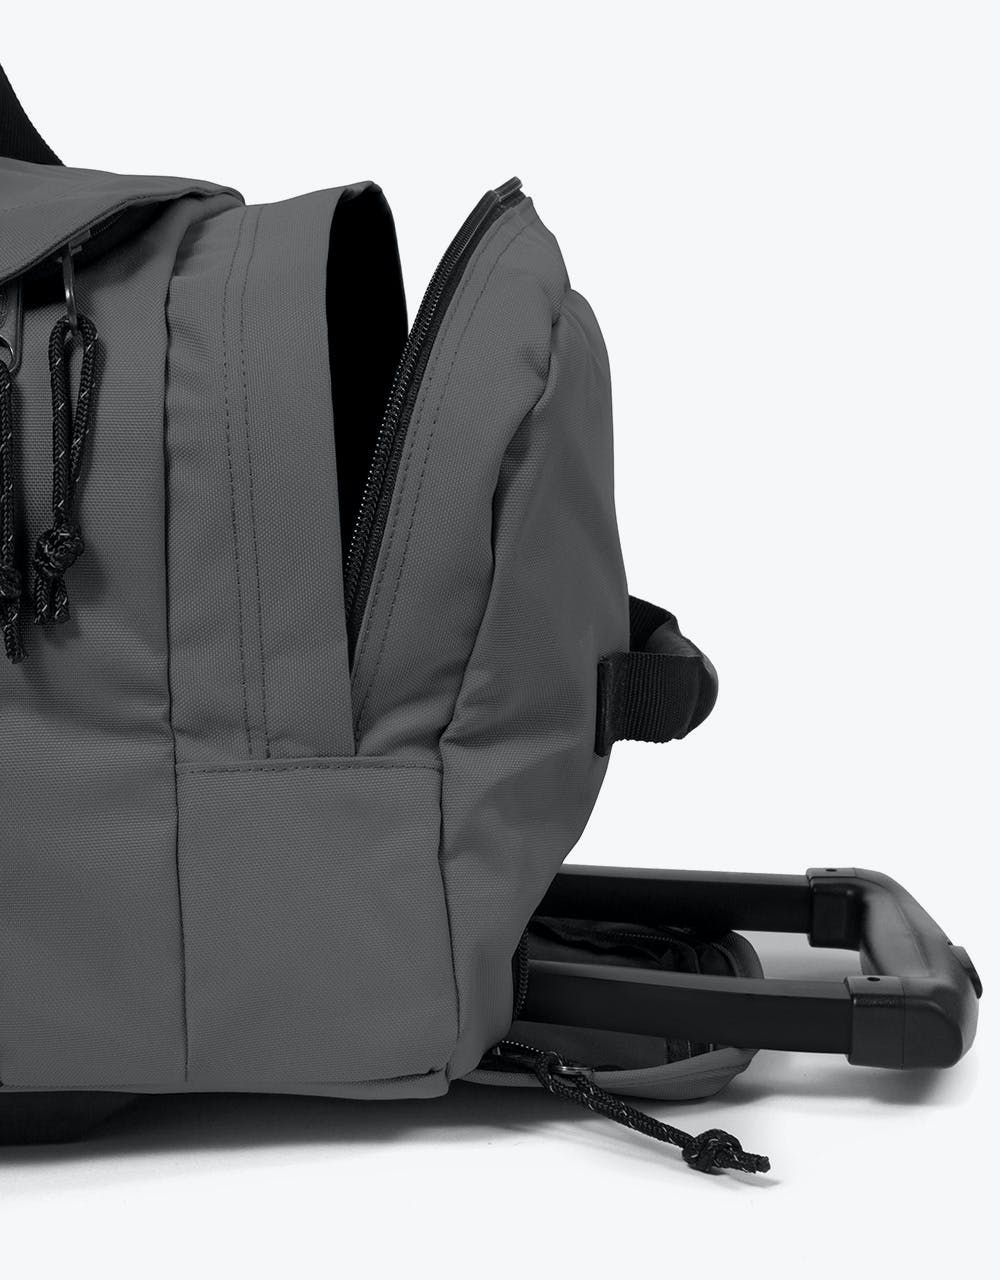 Eastpak Leatherface Small Wheeled Luggage Bag - Woven Grey